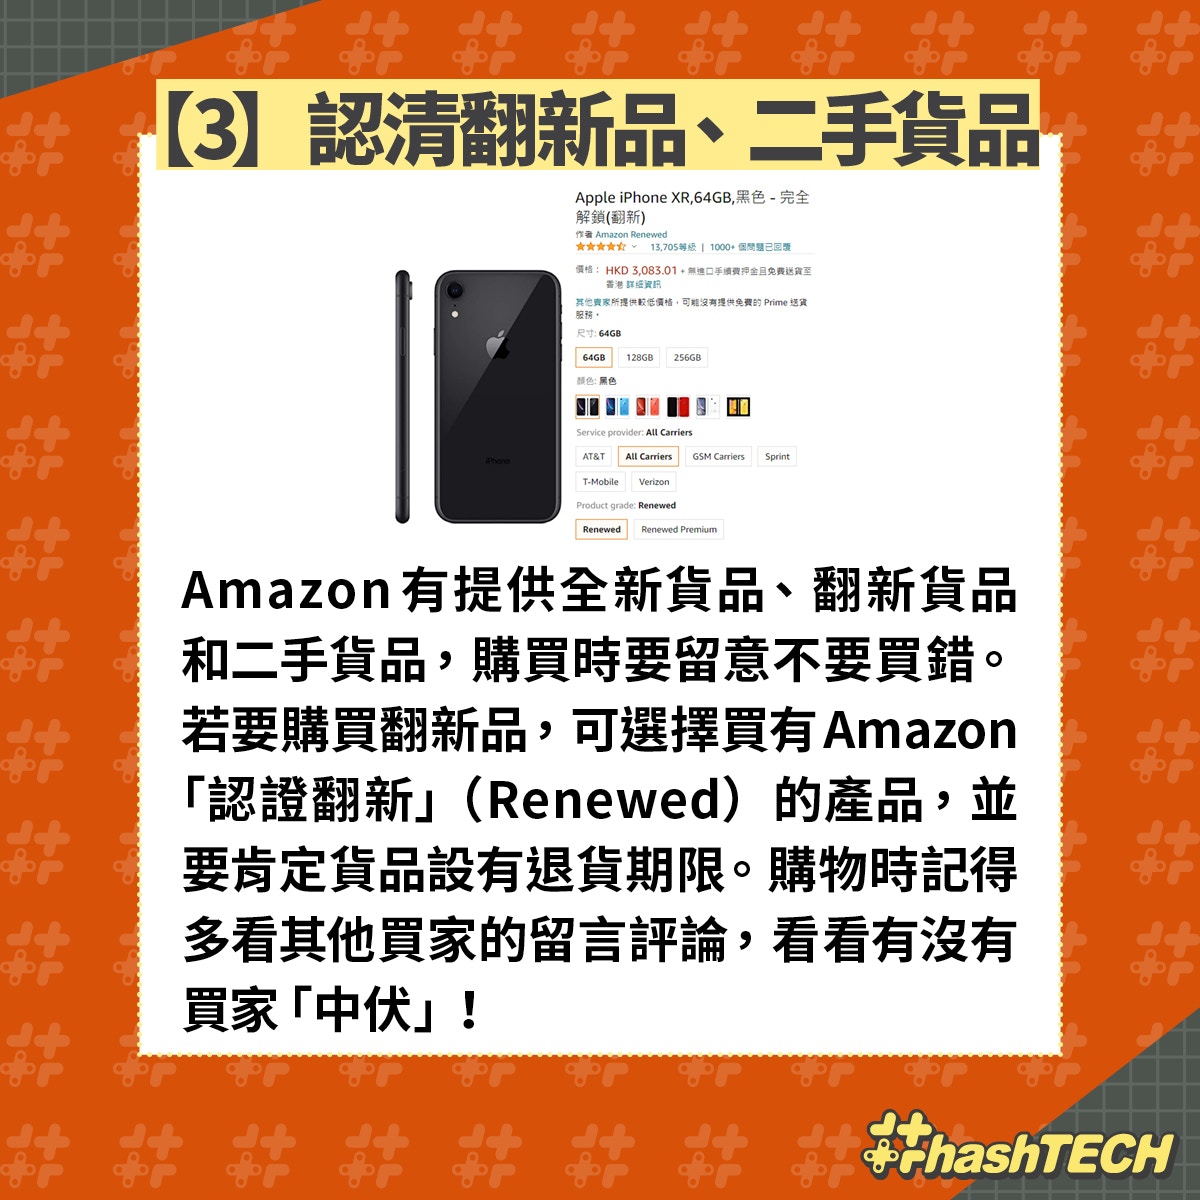 Black Friday 優惠 Amazon Uniqlo劈價產品持續更新